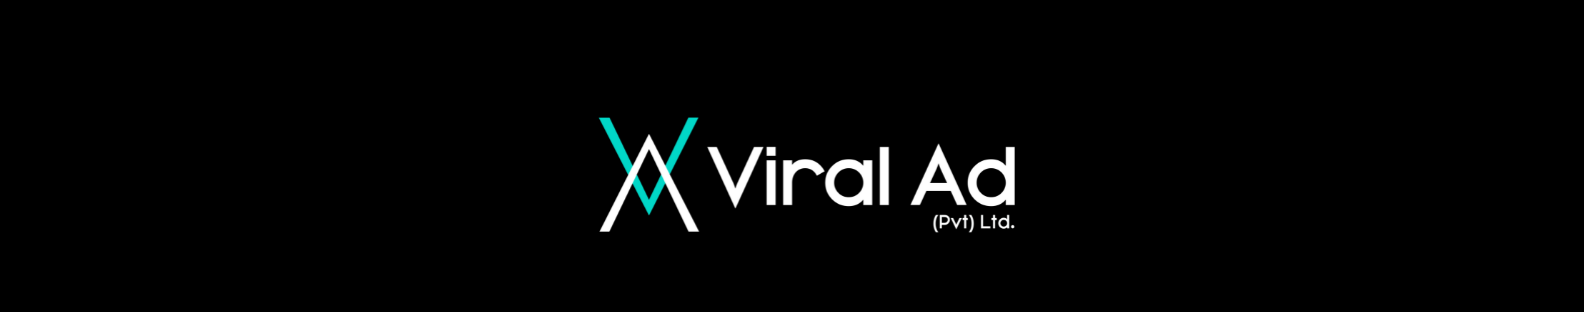 ViralAd (Pvt) Ltd.'s profile banner